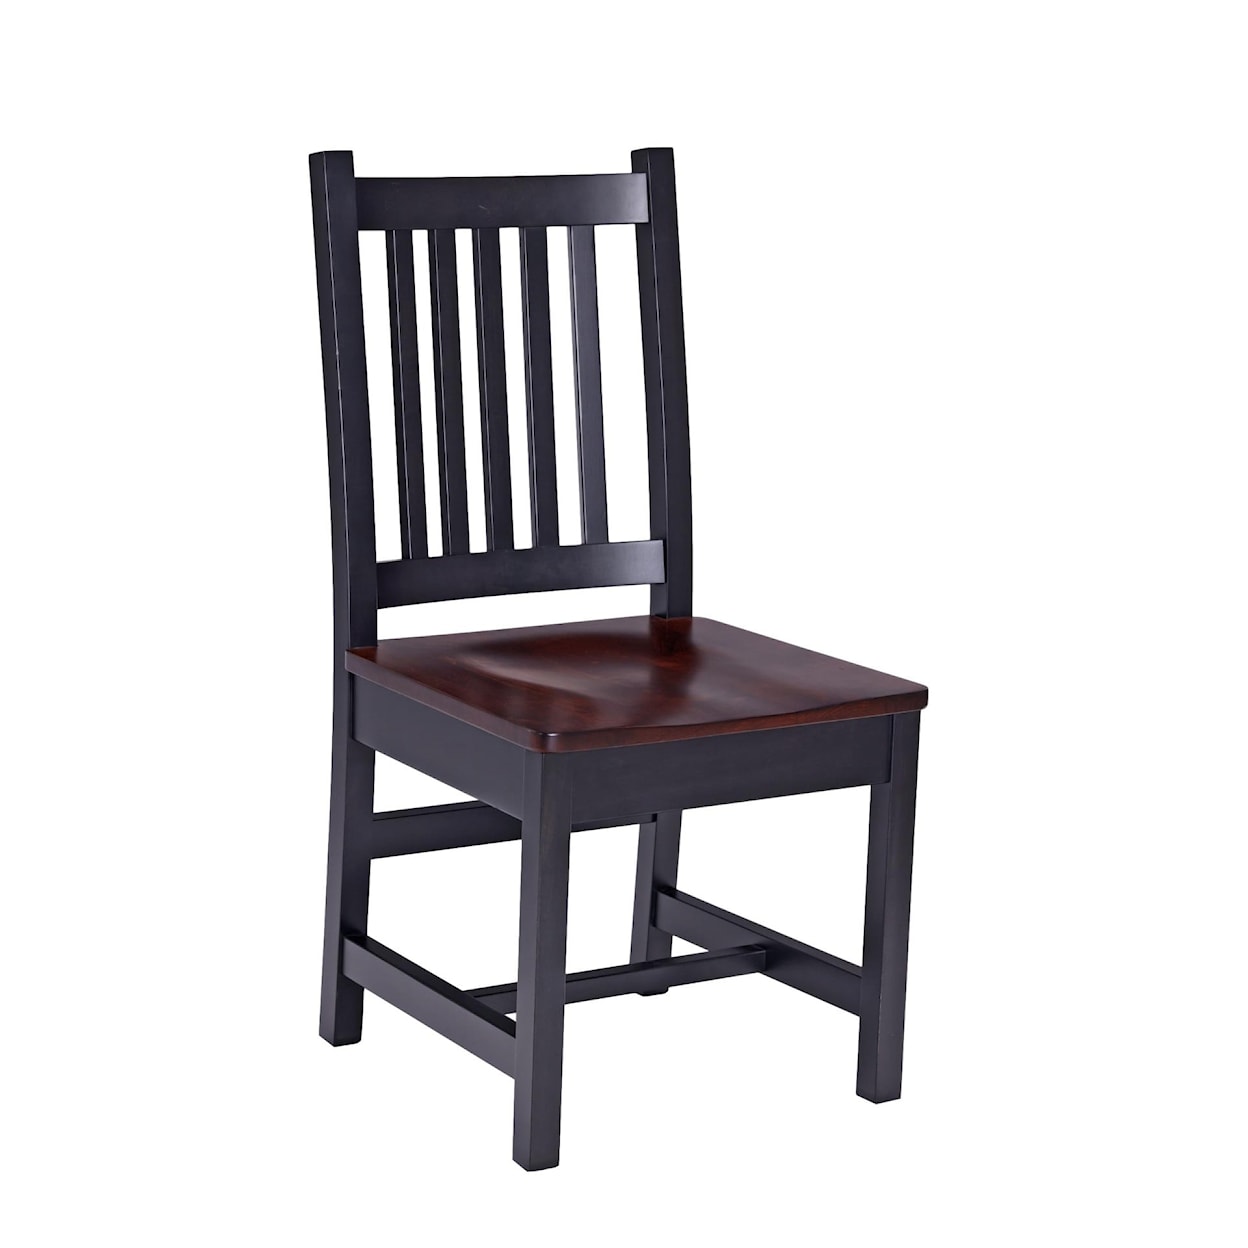 L.J. Gascho Furniture Saber Dining Chair